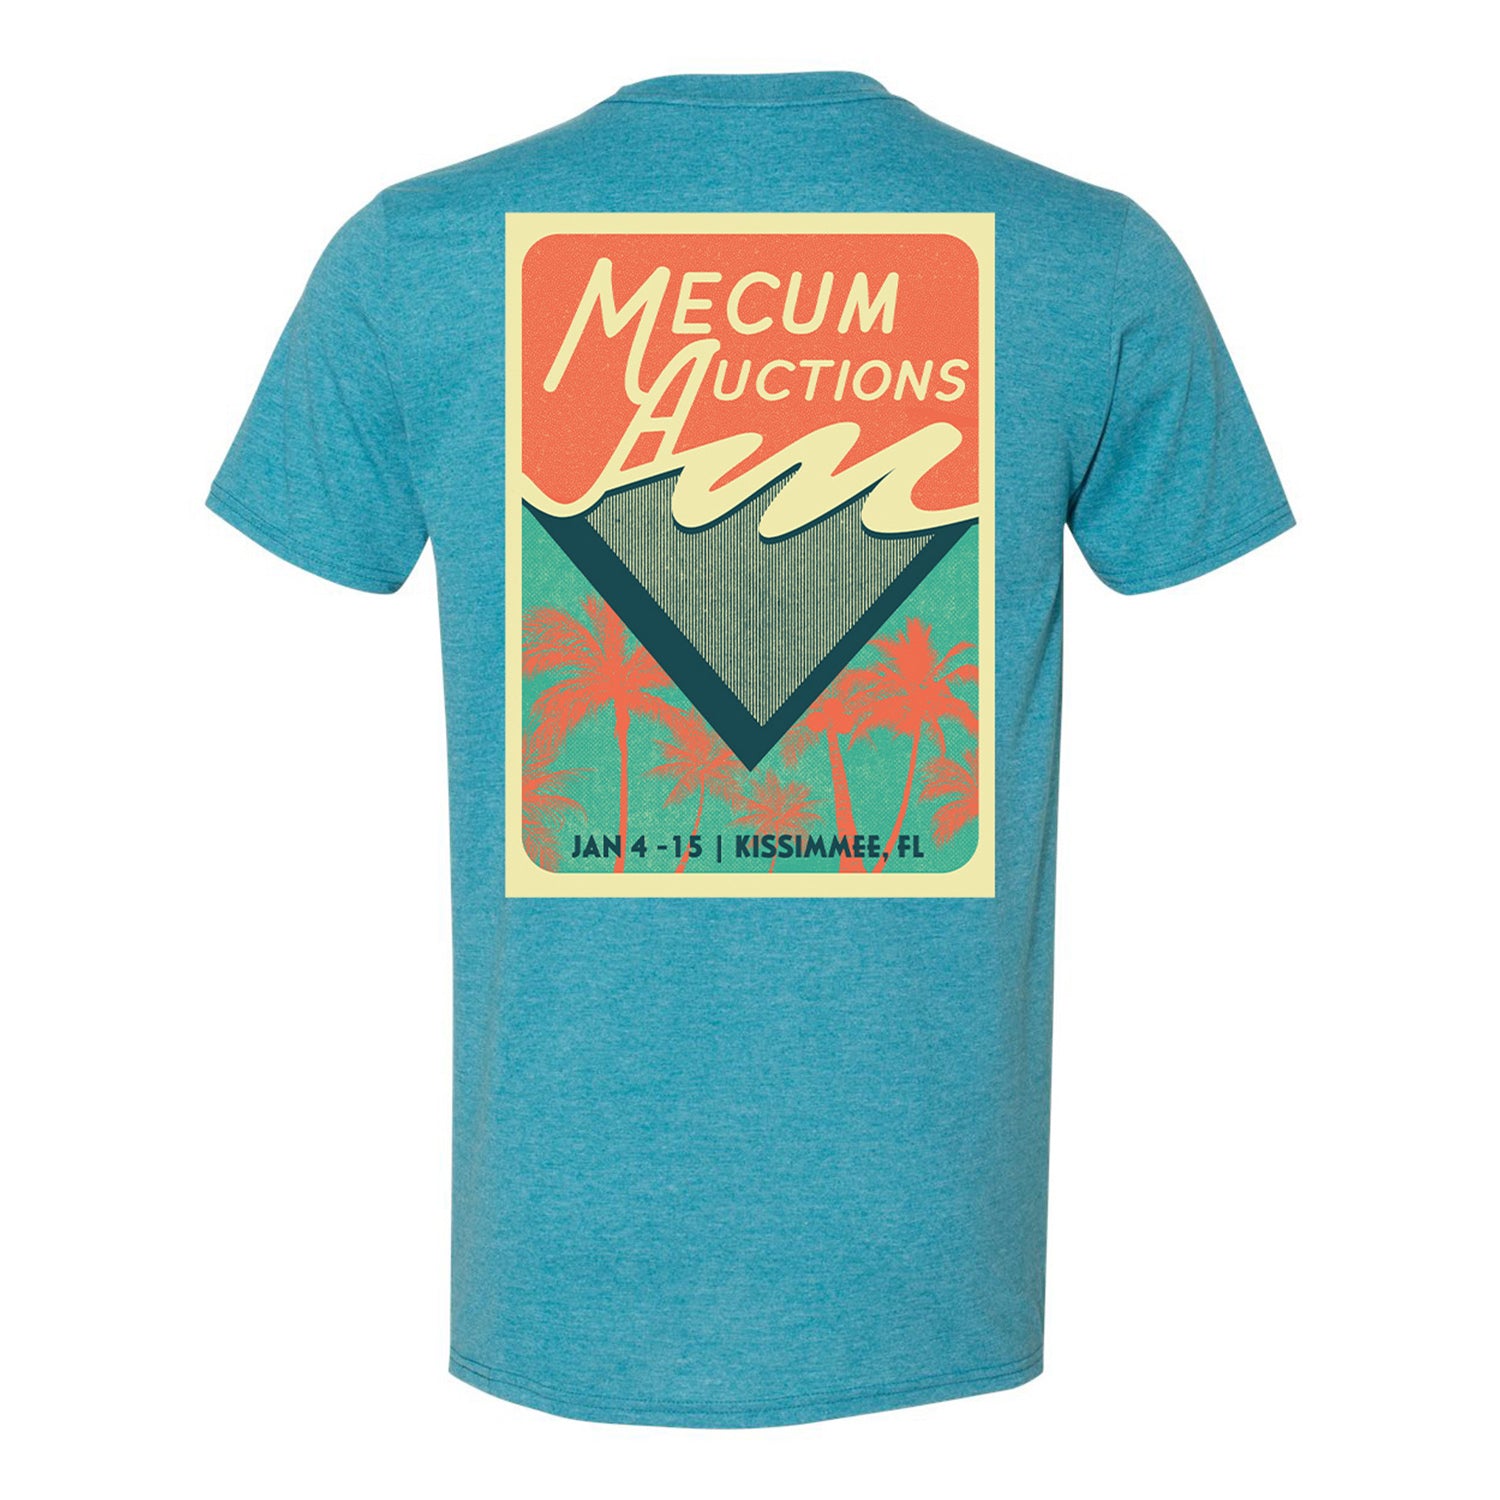 Mecum Auctions Kissimmee Retro Light Blue T-Shirt - Back View